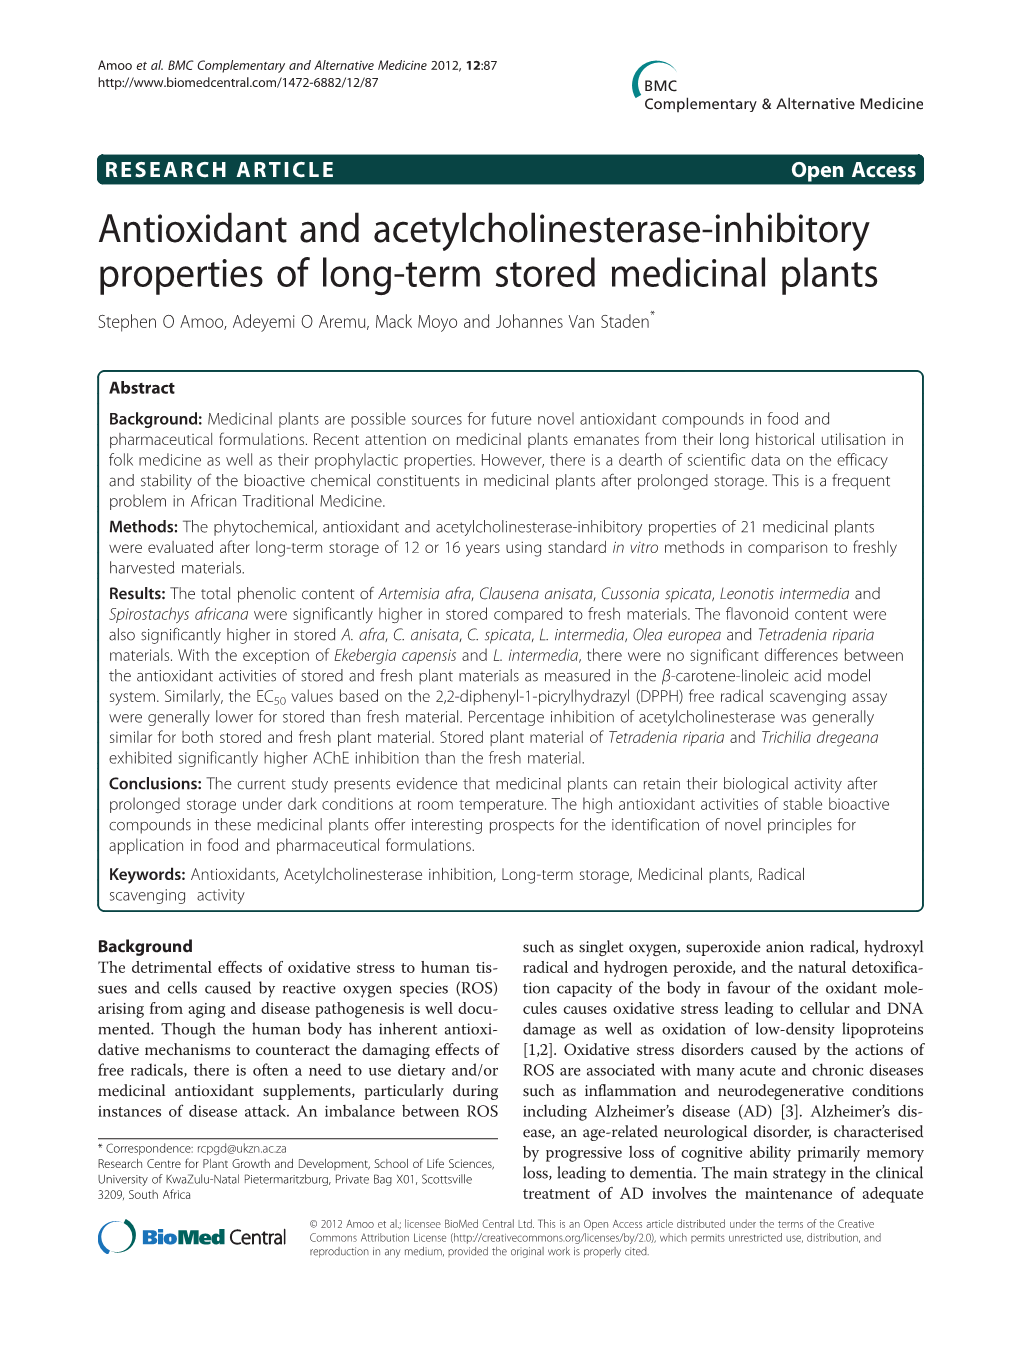 Antioxidant and Acetylcholinesterase-Inhibitory Properties of Long-Term Stored Medicinal Plants Stephen O Amoo, Adeyemi O Aremu, Mack Moyo and Johannes Van Staden*